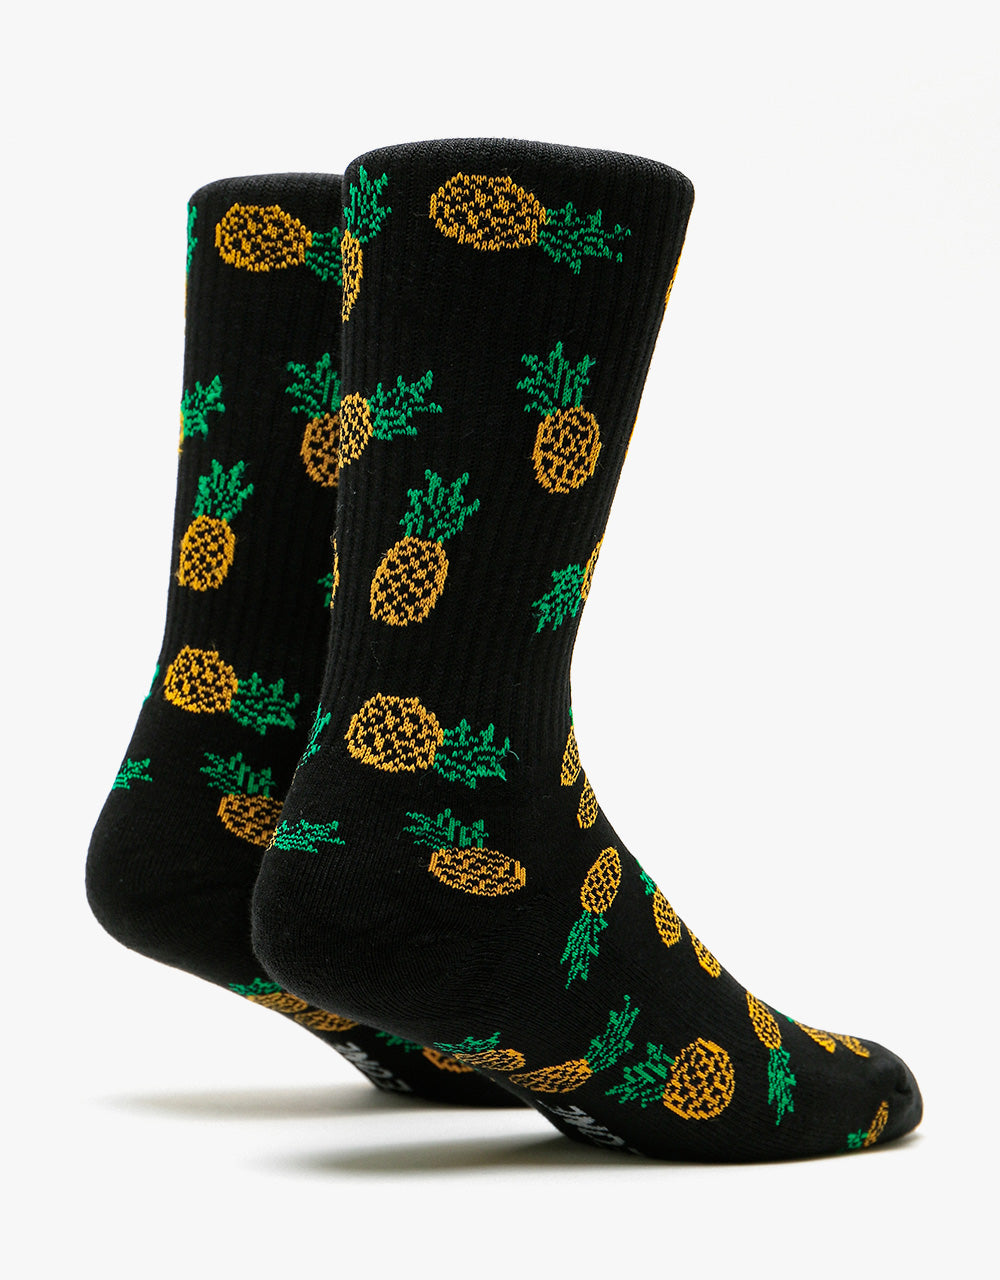 Route One Pineapples Socks - Black